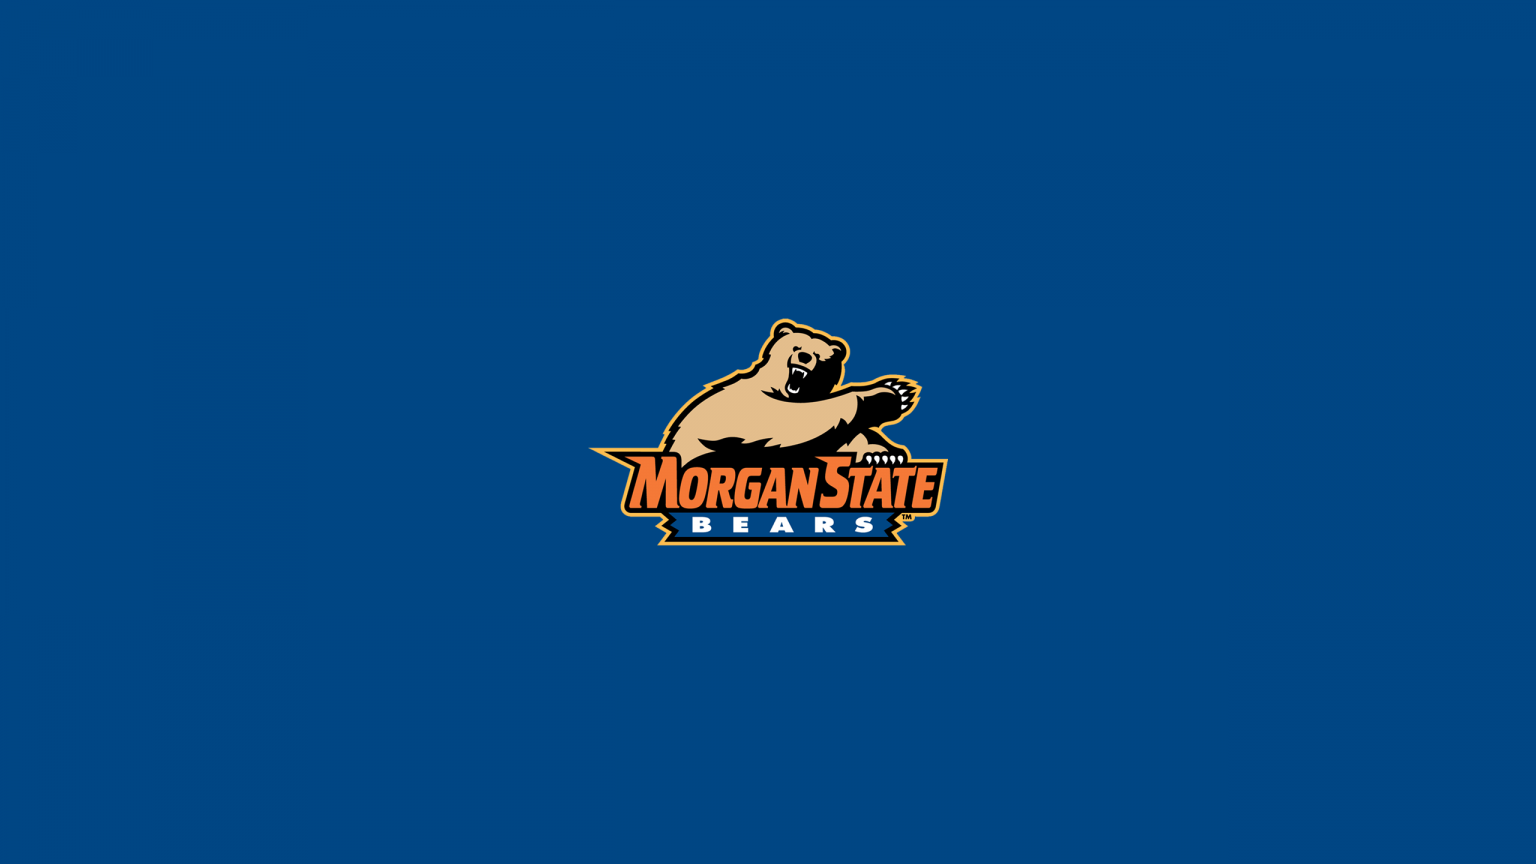 Morgan State Bears Basketball - NCAAB - Square Bettor